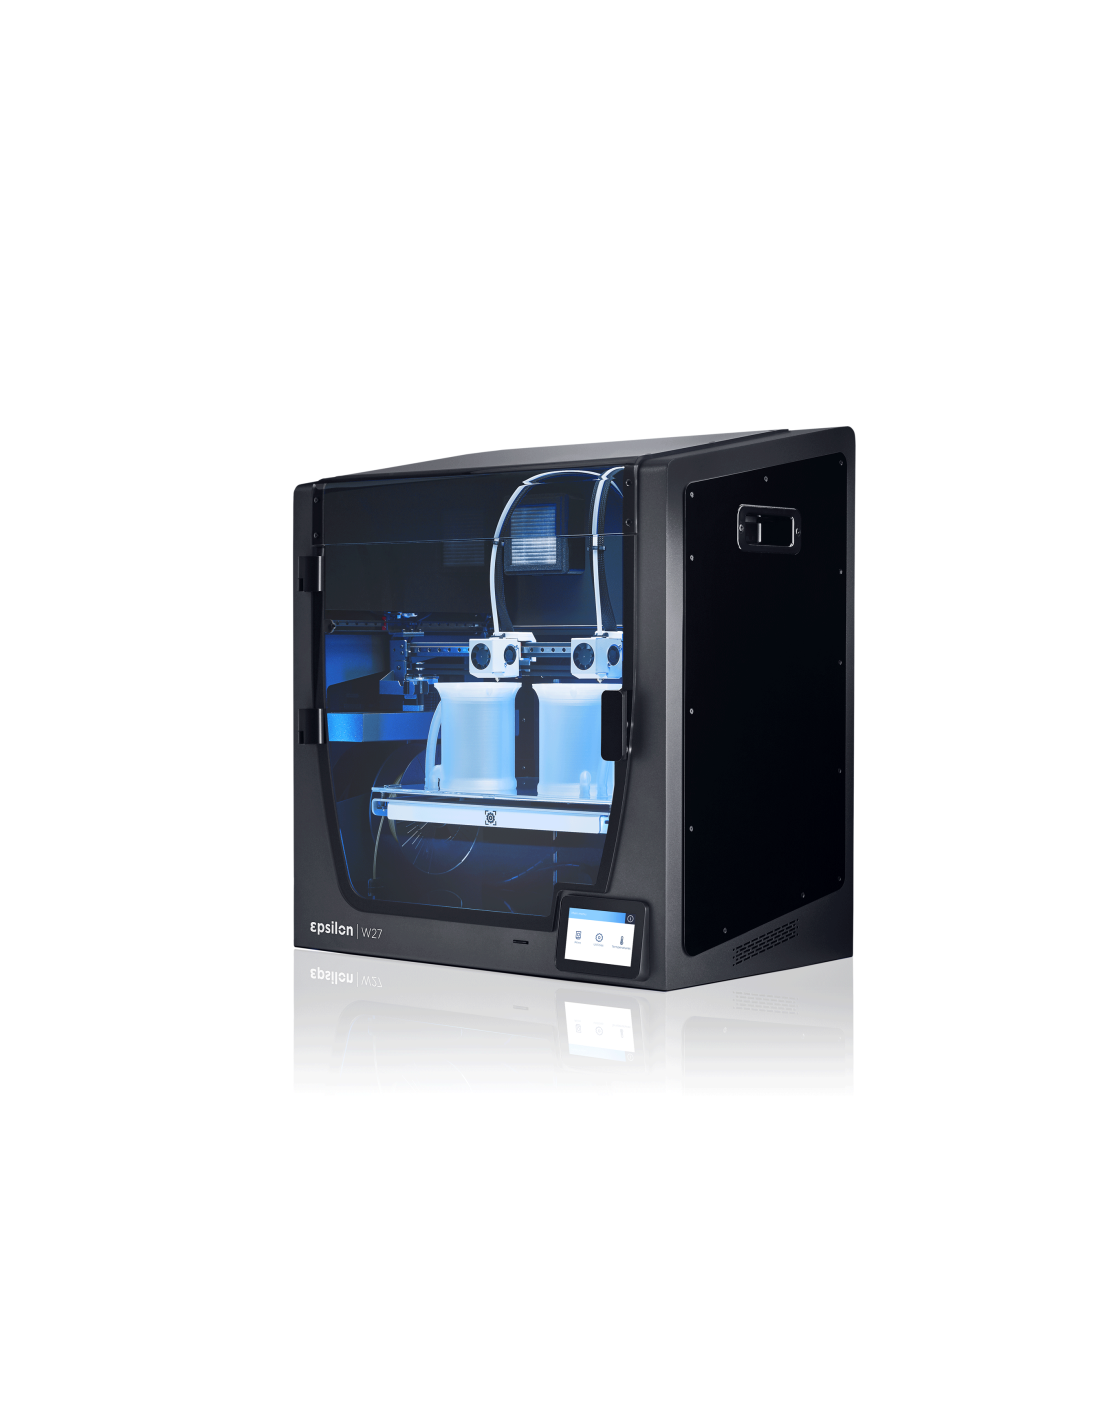 BCN3D Epsilon W27 Gen 2 Impresora 3D profesional